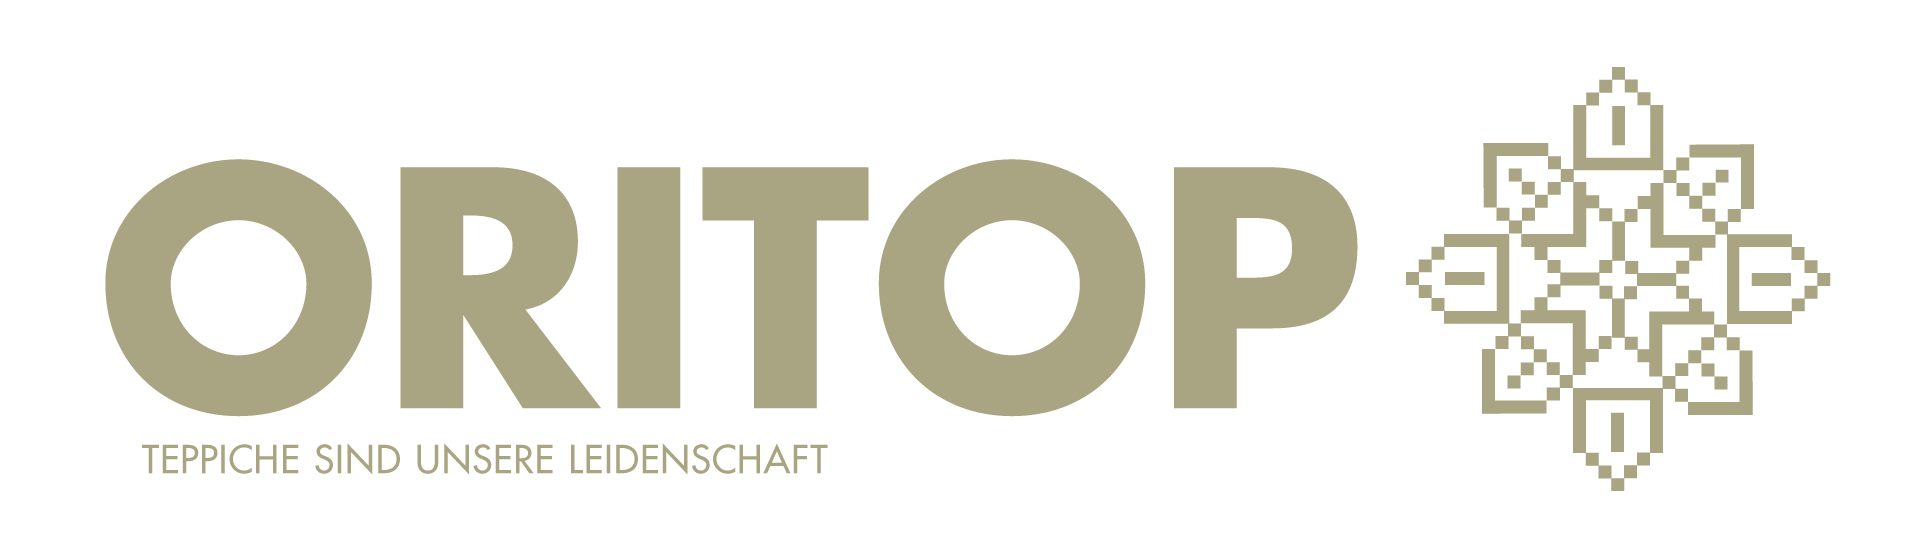 ORITOP GmbH